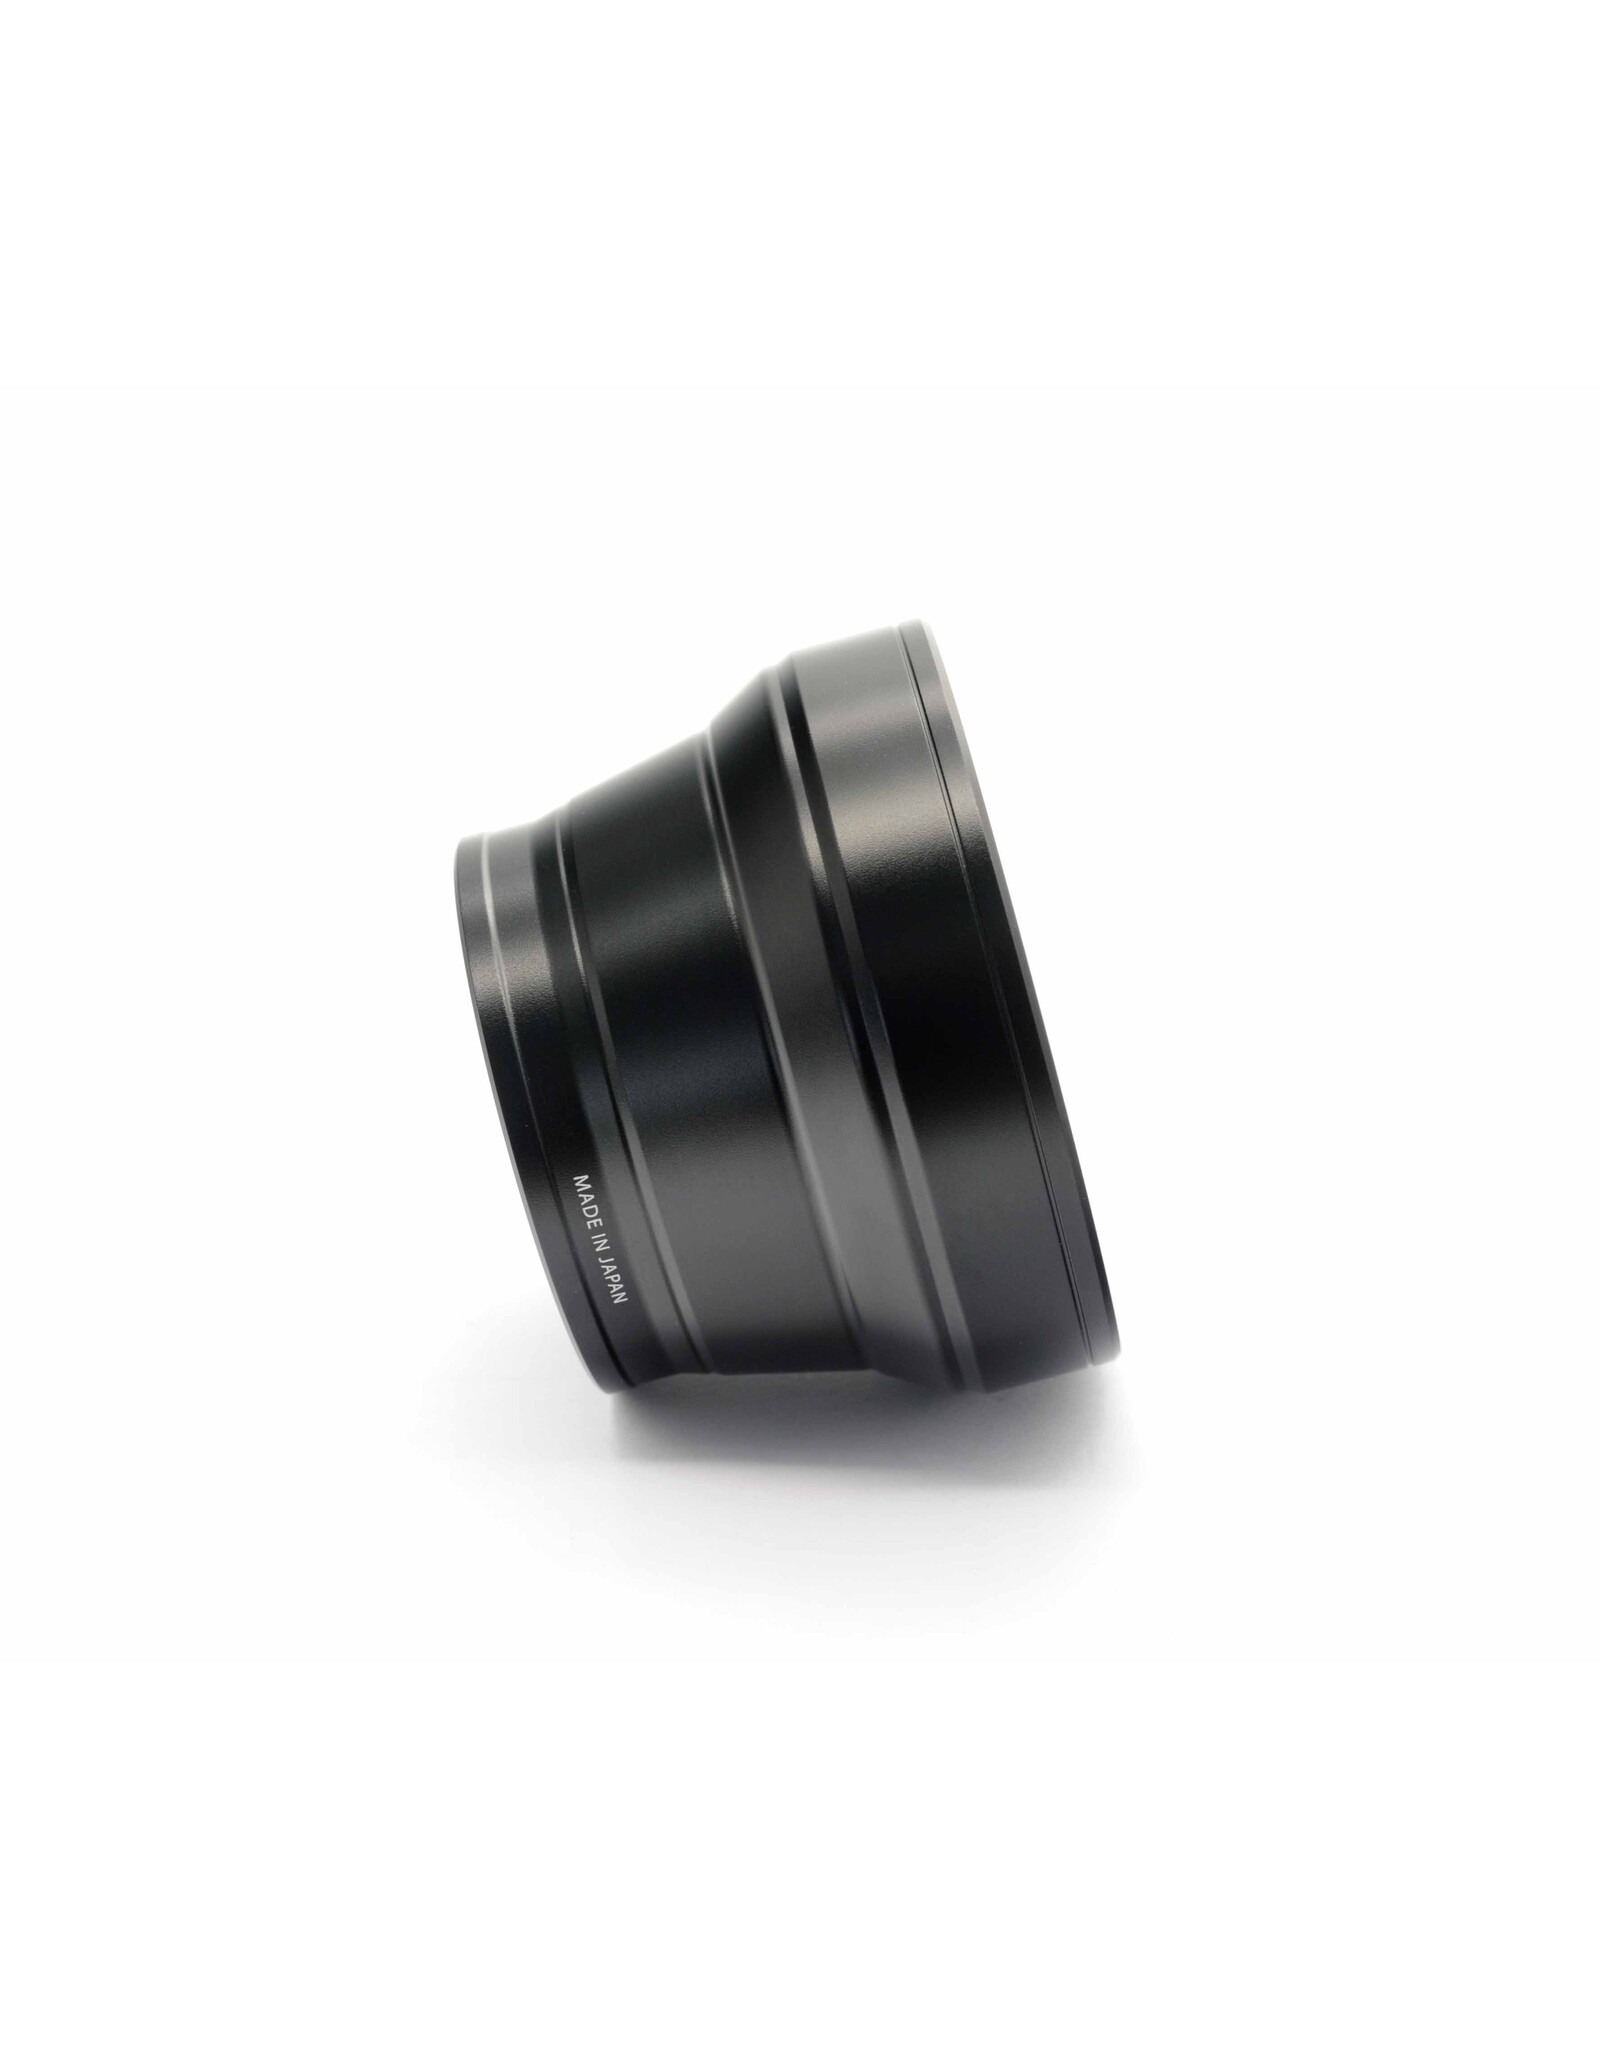 Fuji Fuji TCL-X100 II Tele Conversion Lens Black   A3082606